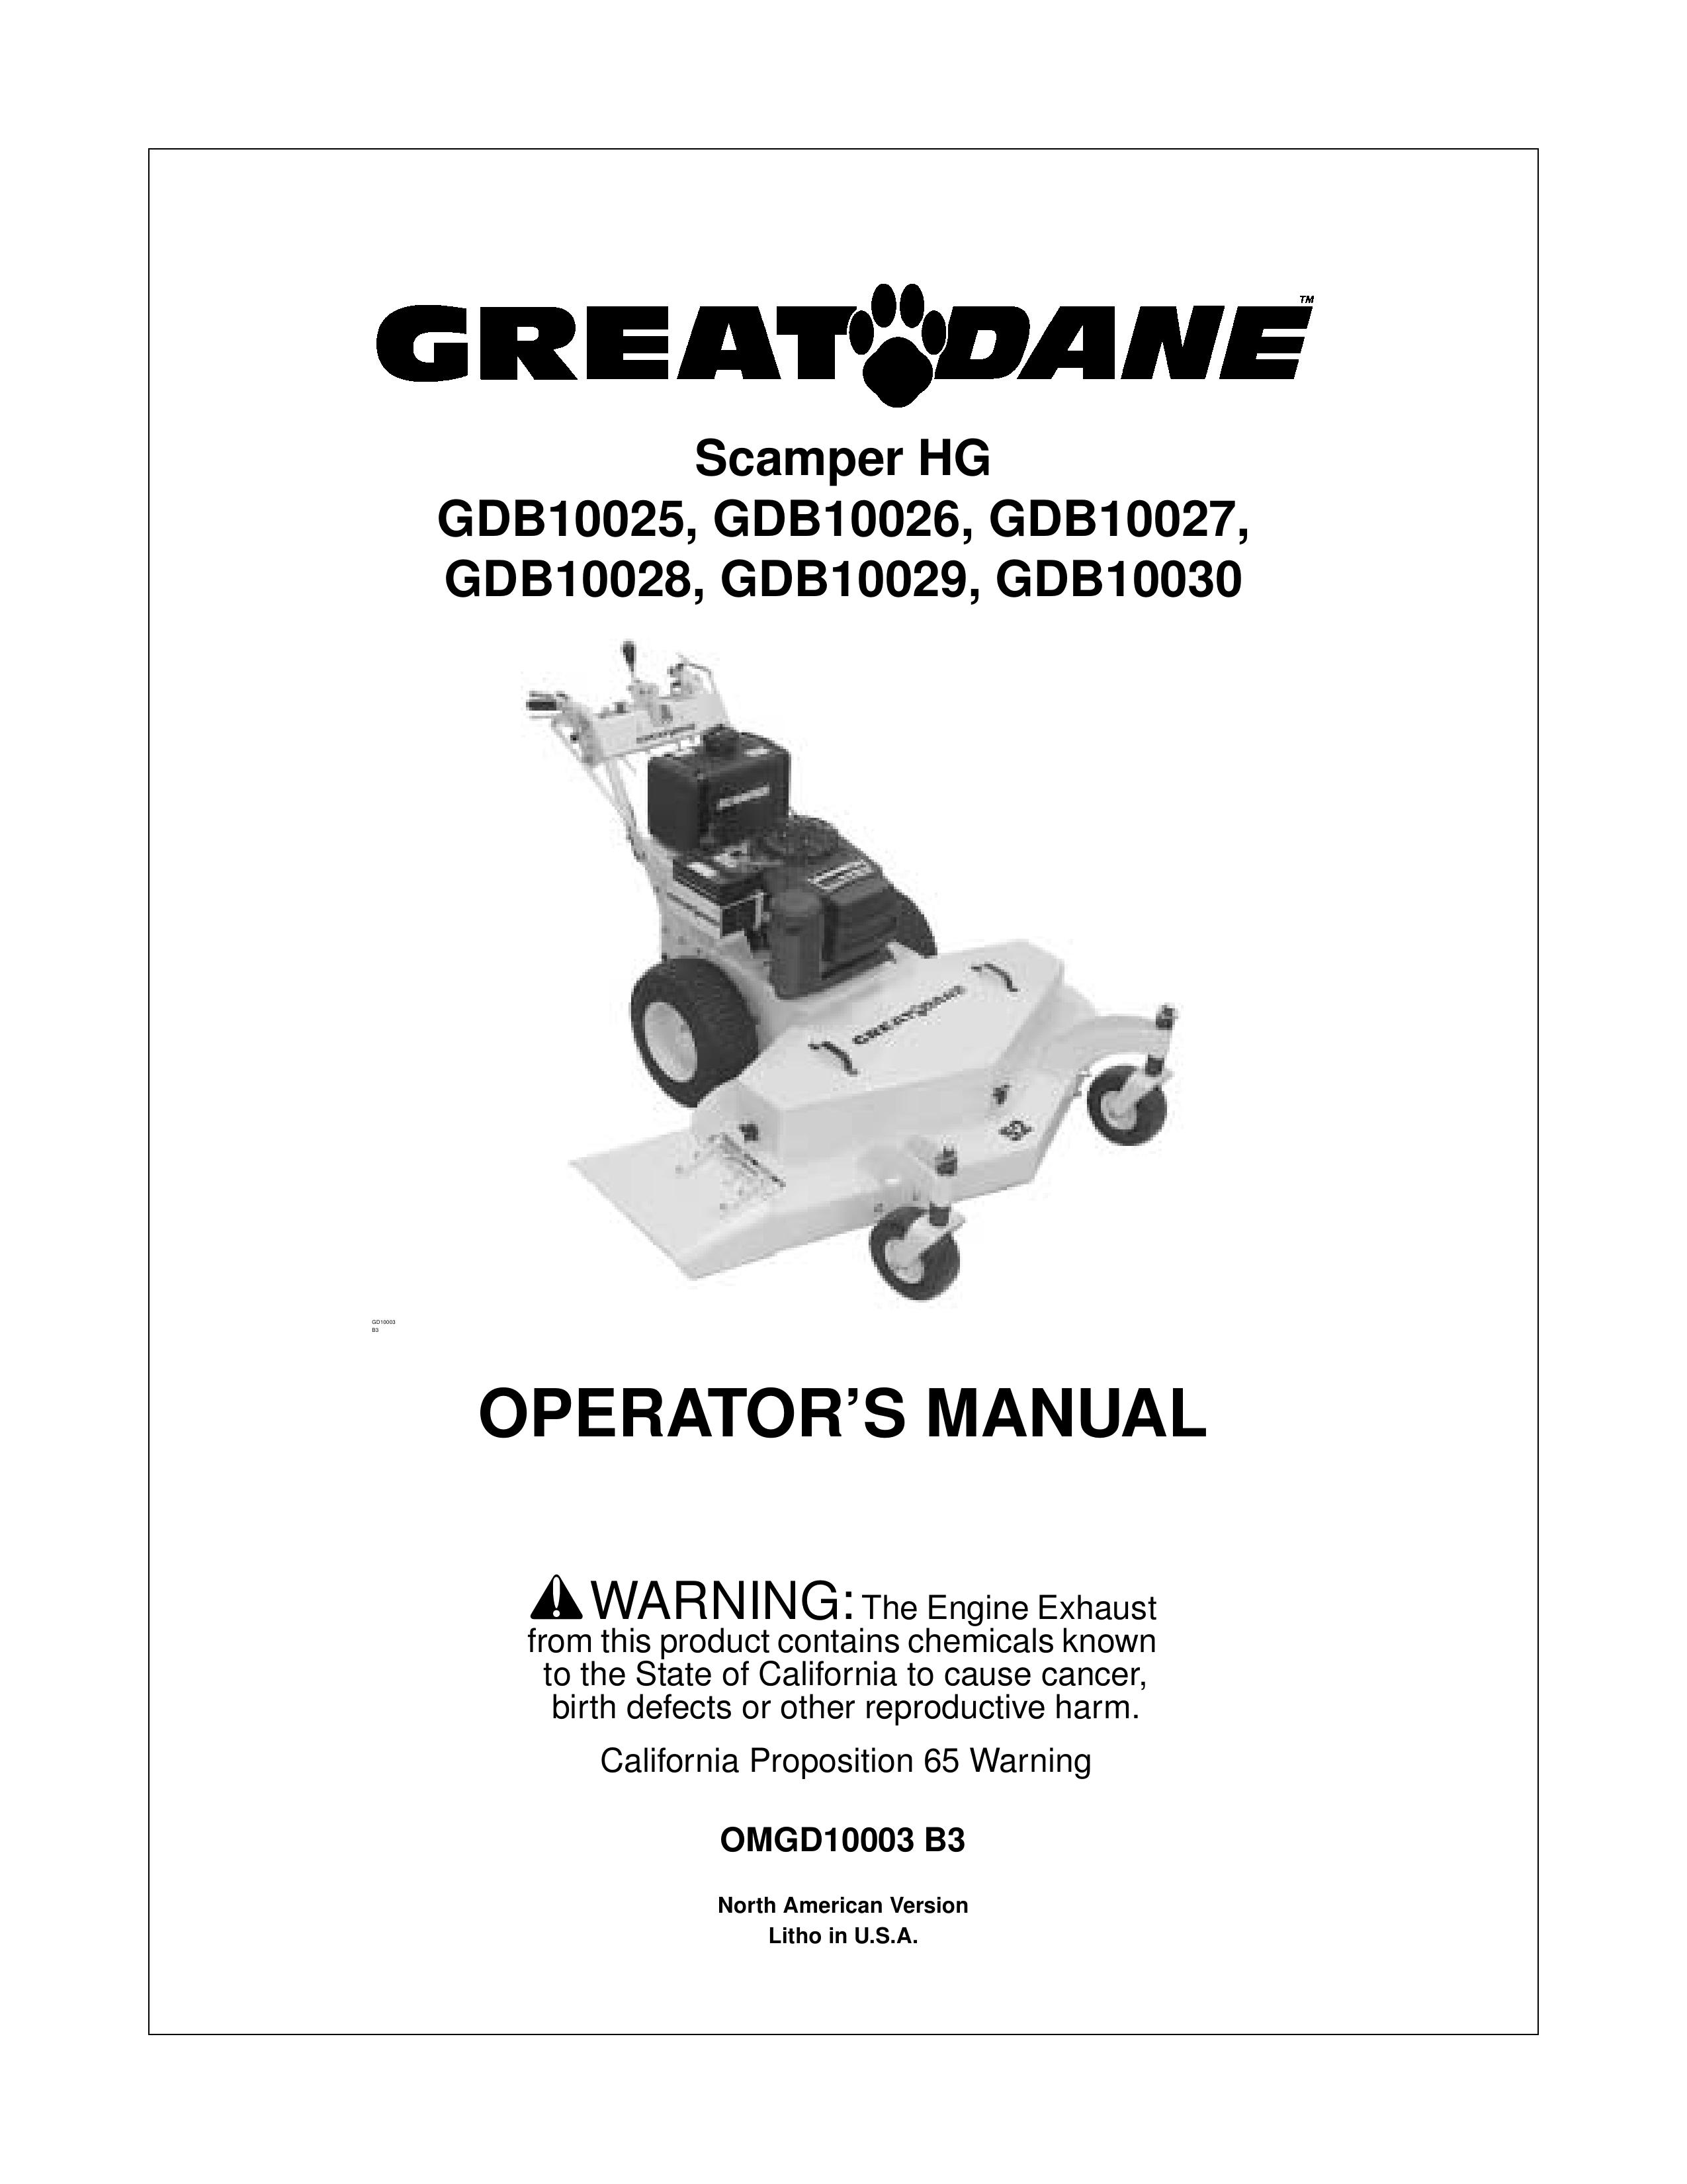 Great Dane GDB10030 Lawn Mower User Manual